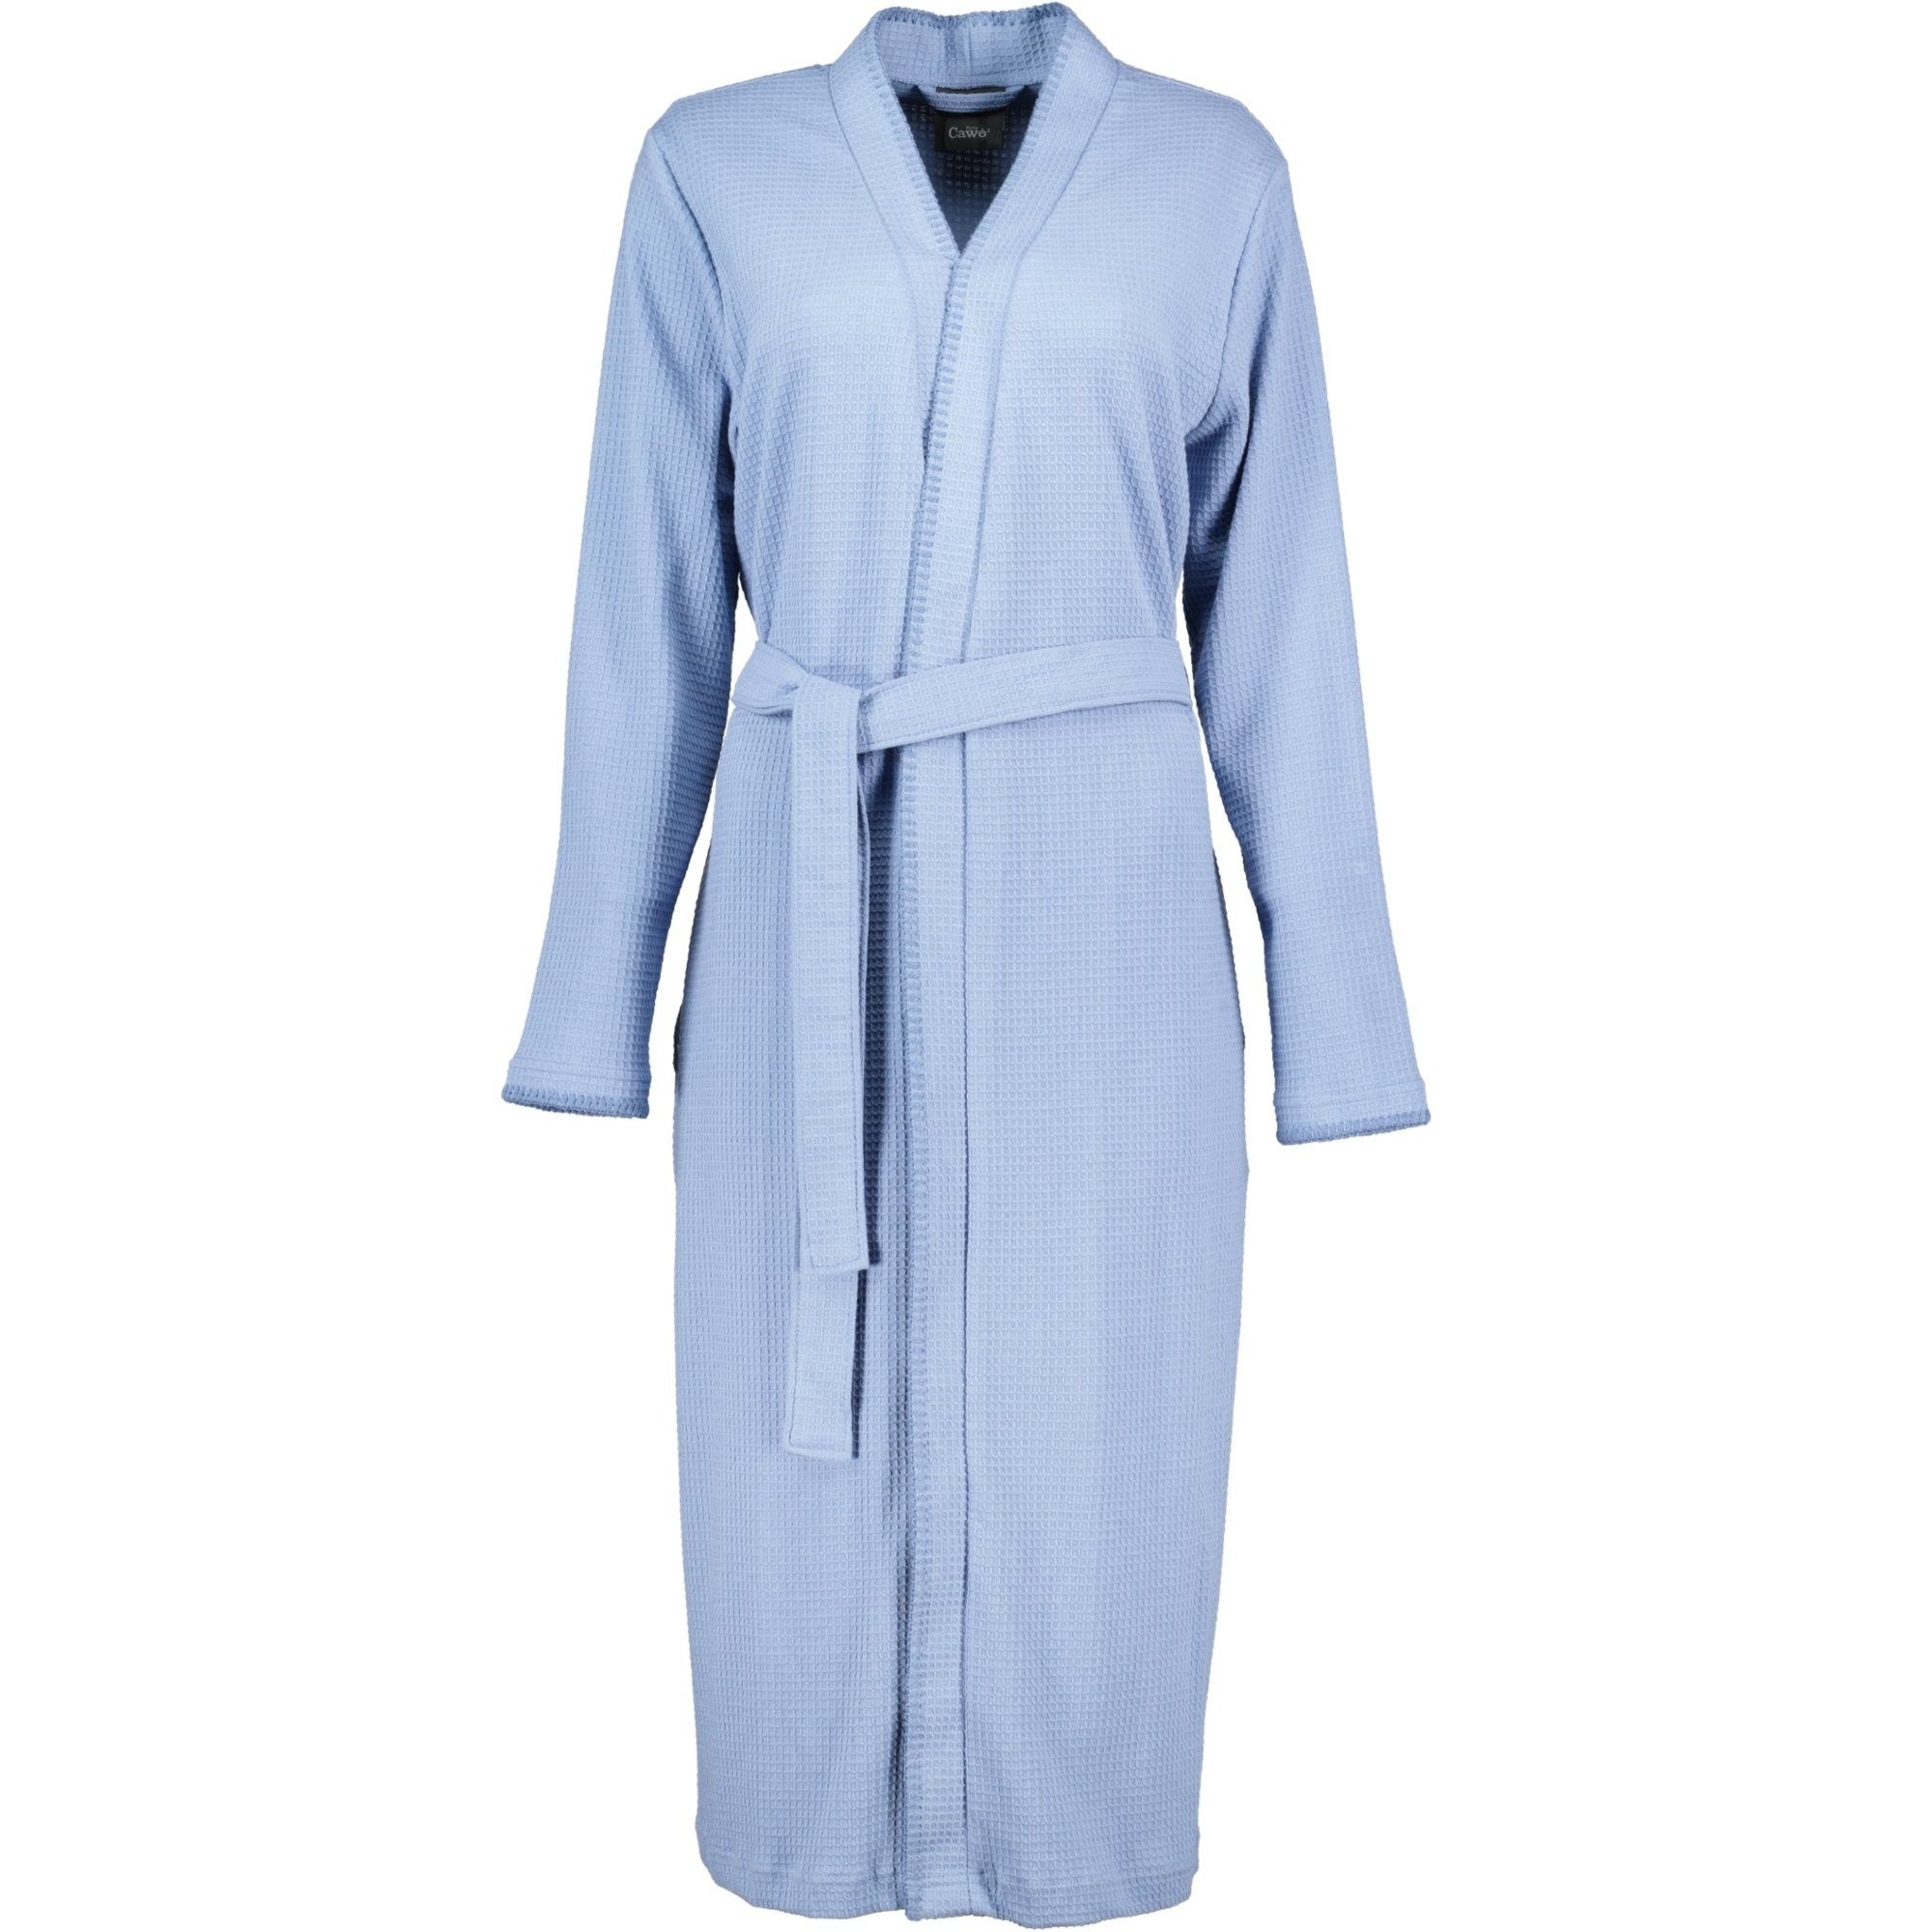 Cawö Home Damenbademantel Pique % 812 Pique, blau 100 Kimono, Kimono Baumwolle